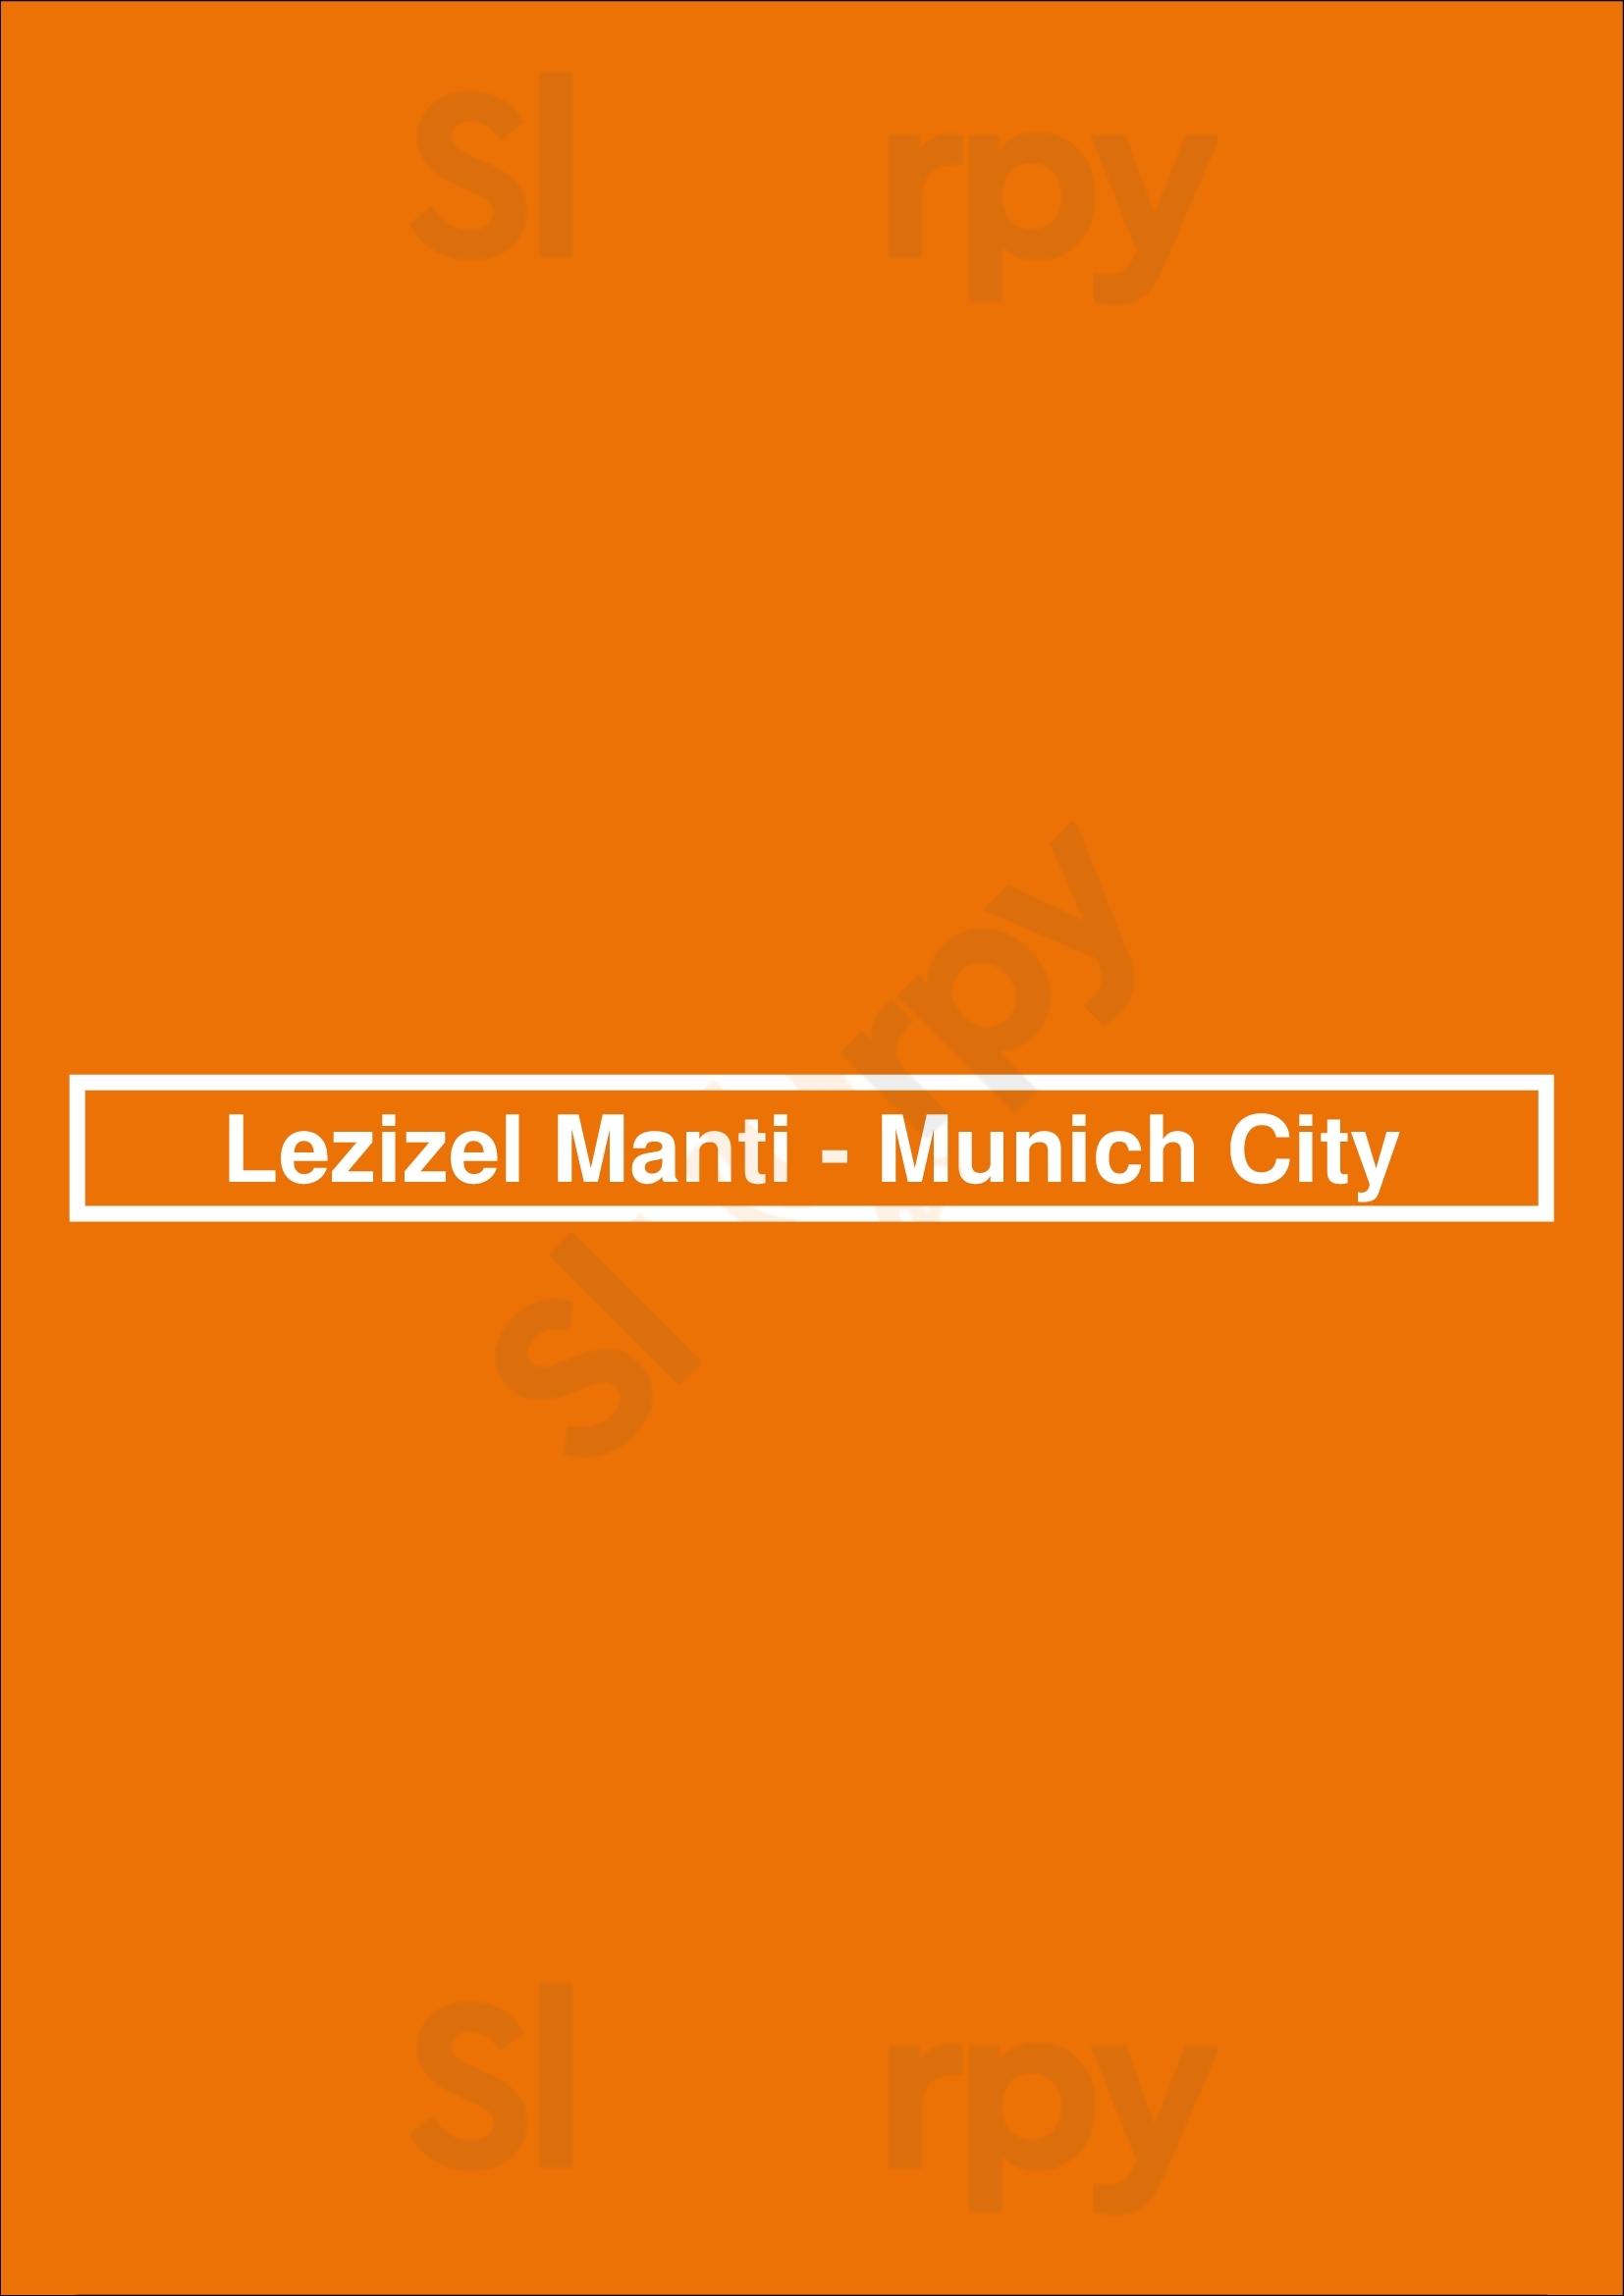 Lezizel Manti - Munich City München Menu - 1